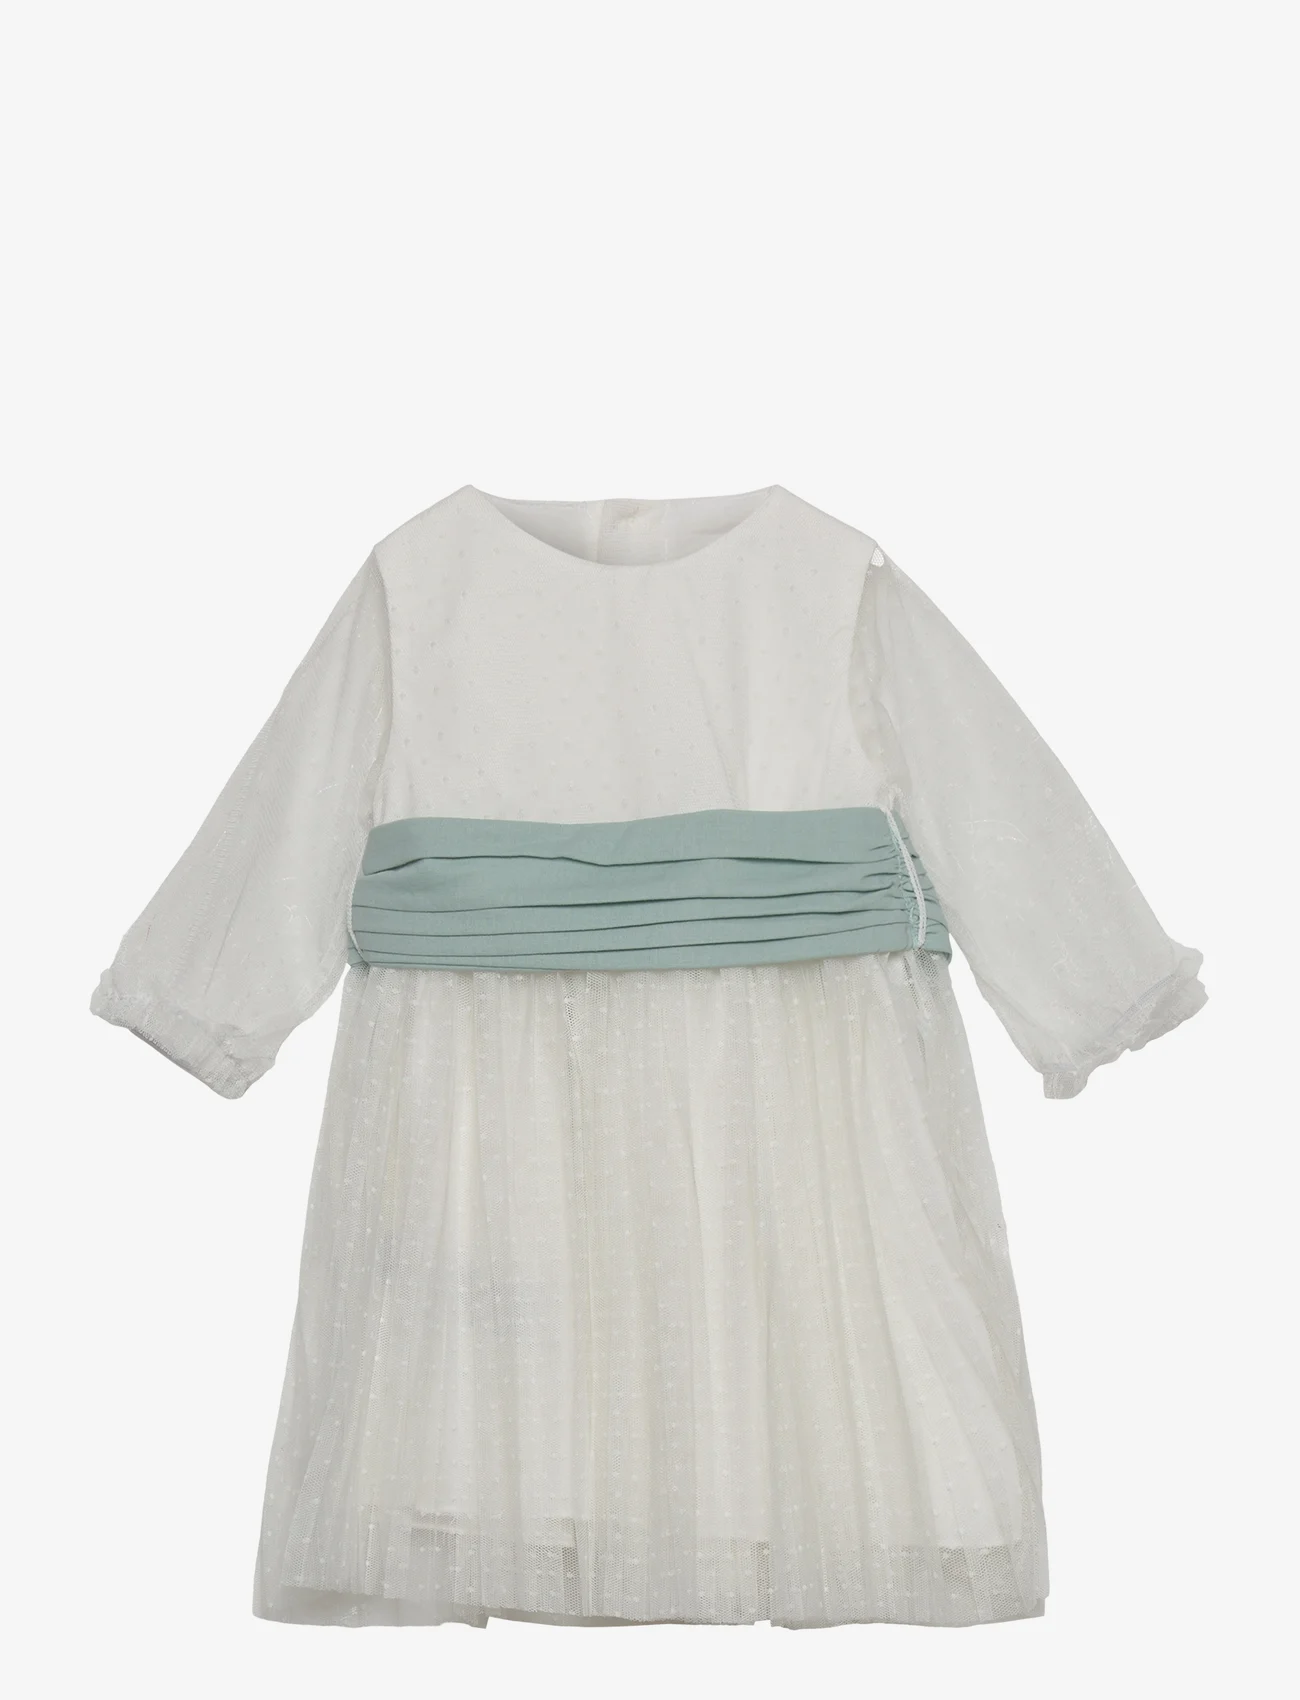 Mango - Embroidered tulle dress - festklänningar - natural white - 0